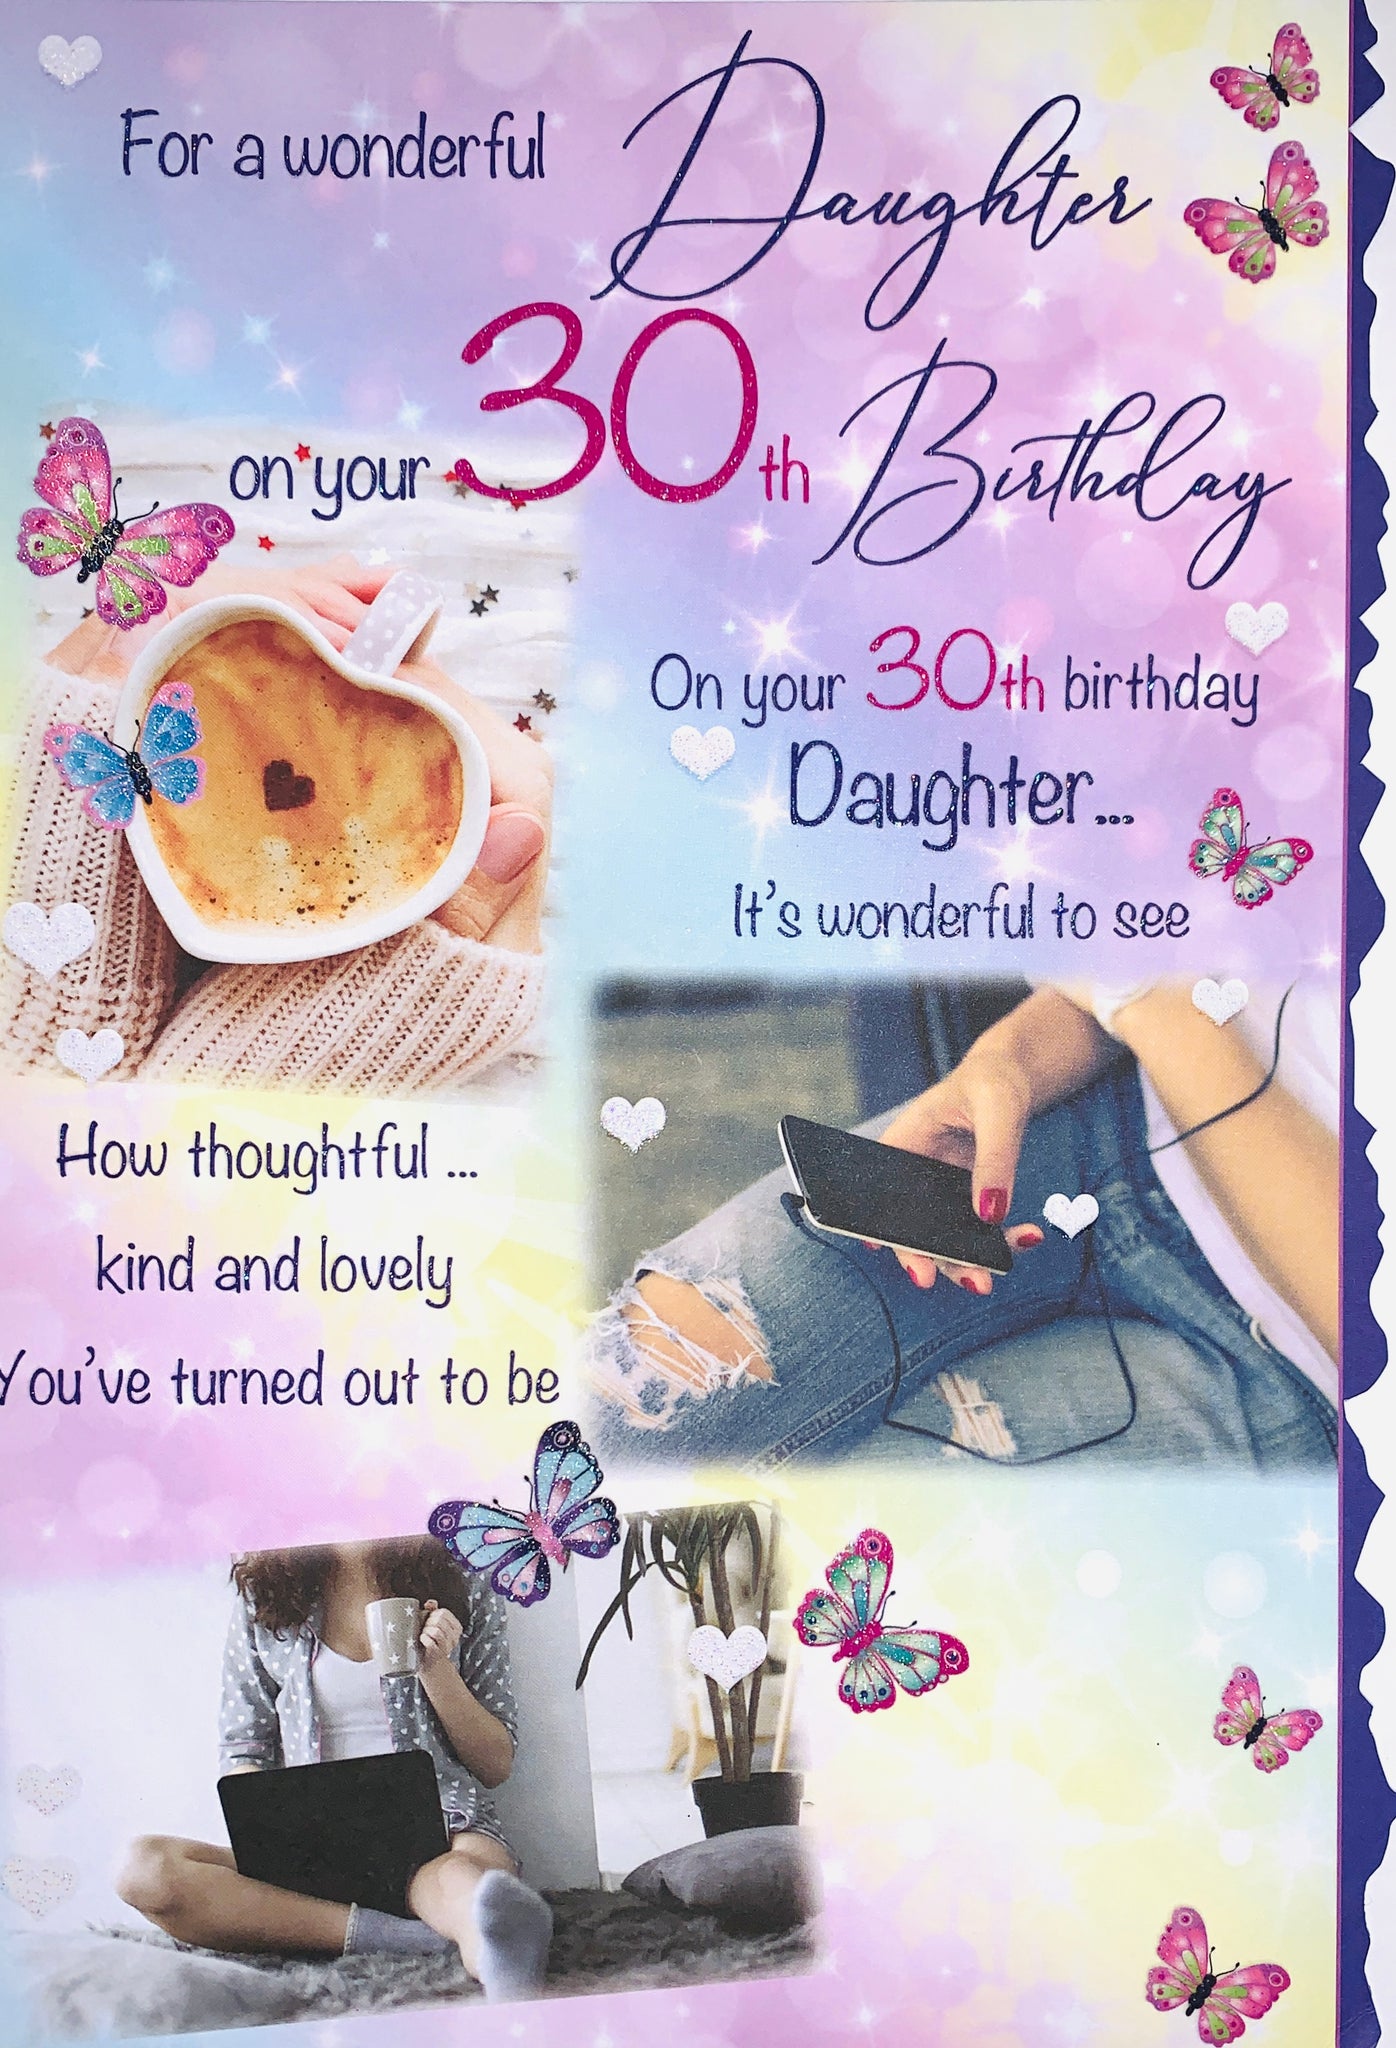 Daughter 30th birthday card- long loving verse